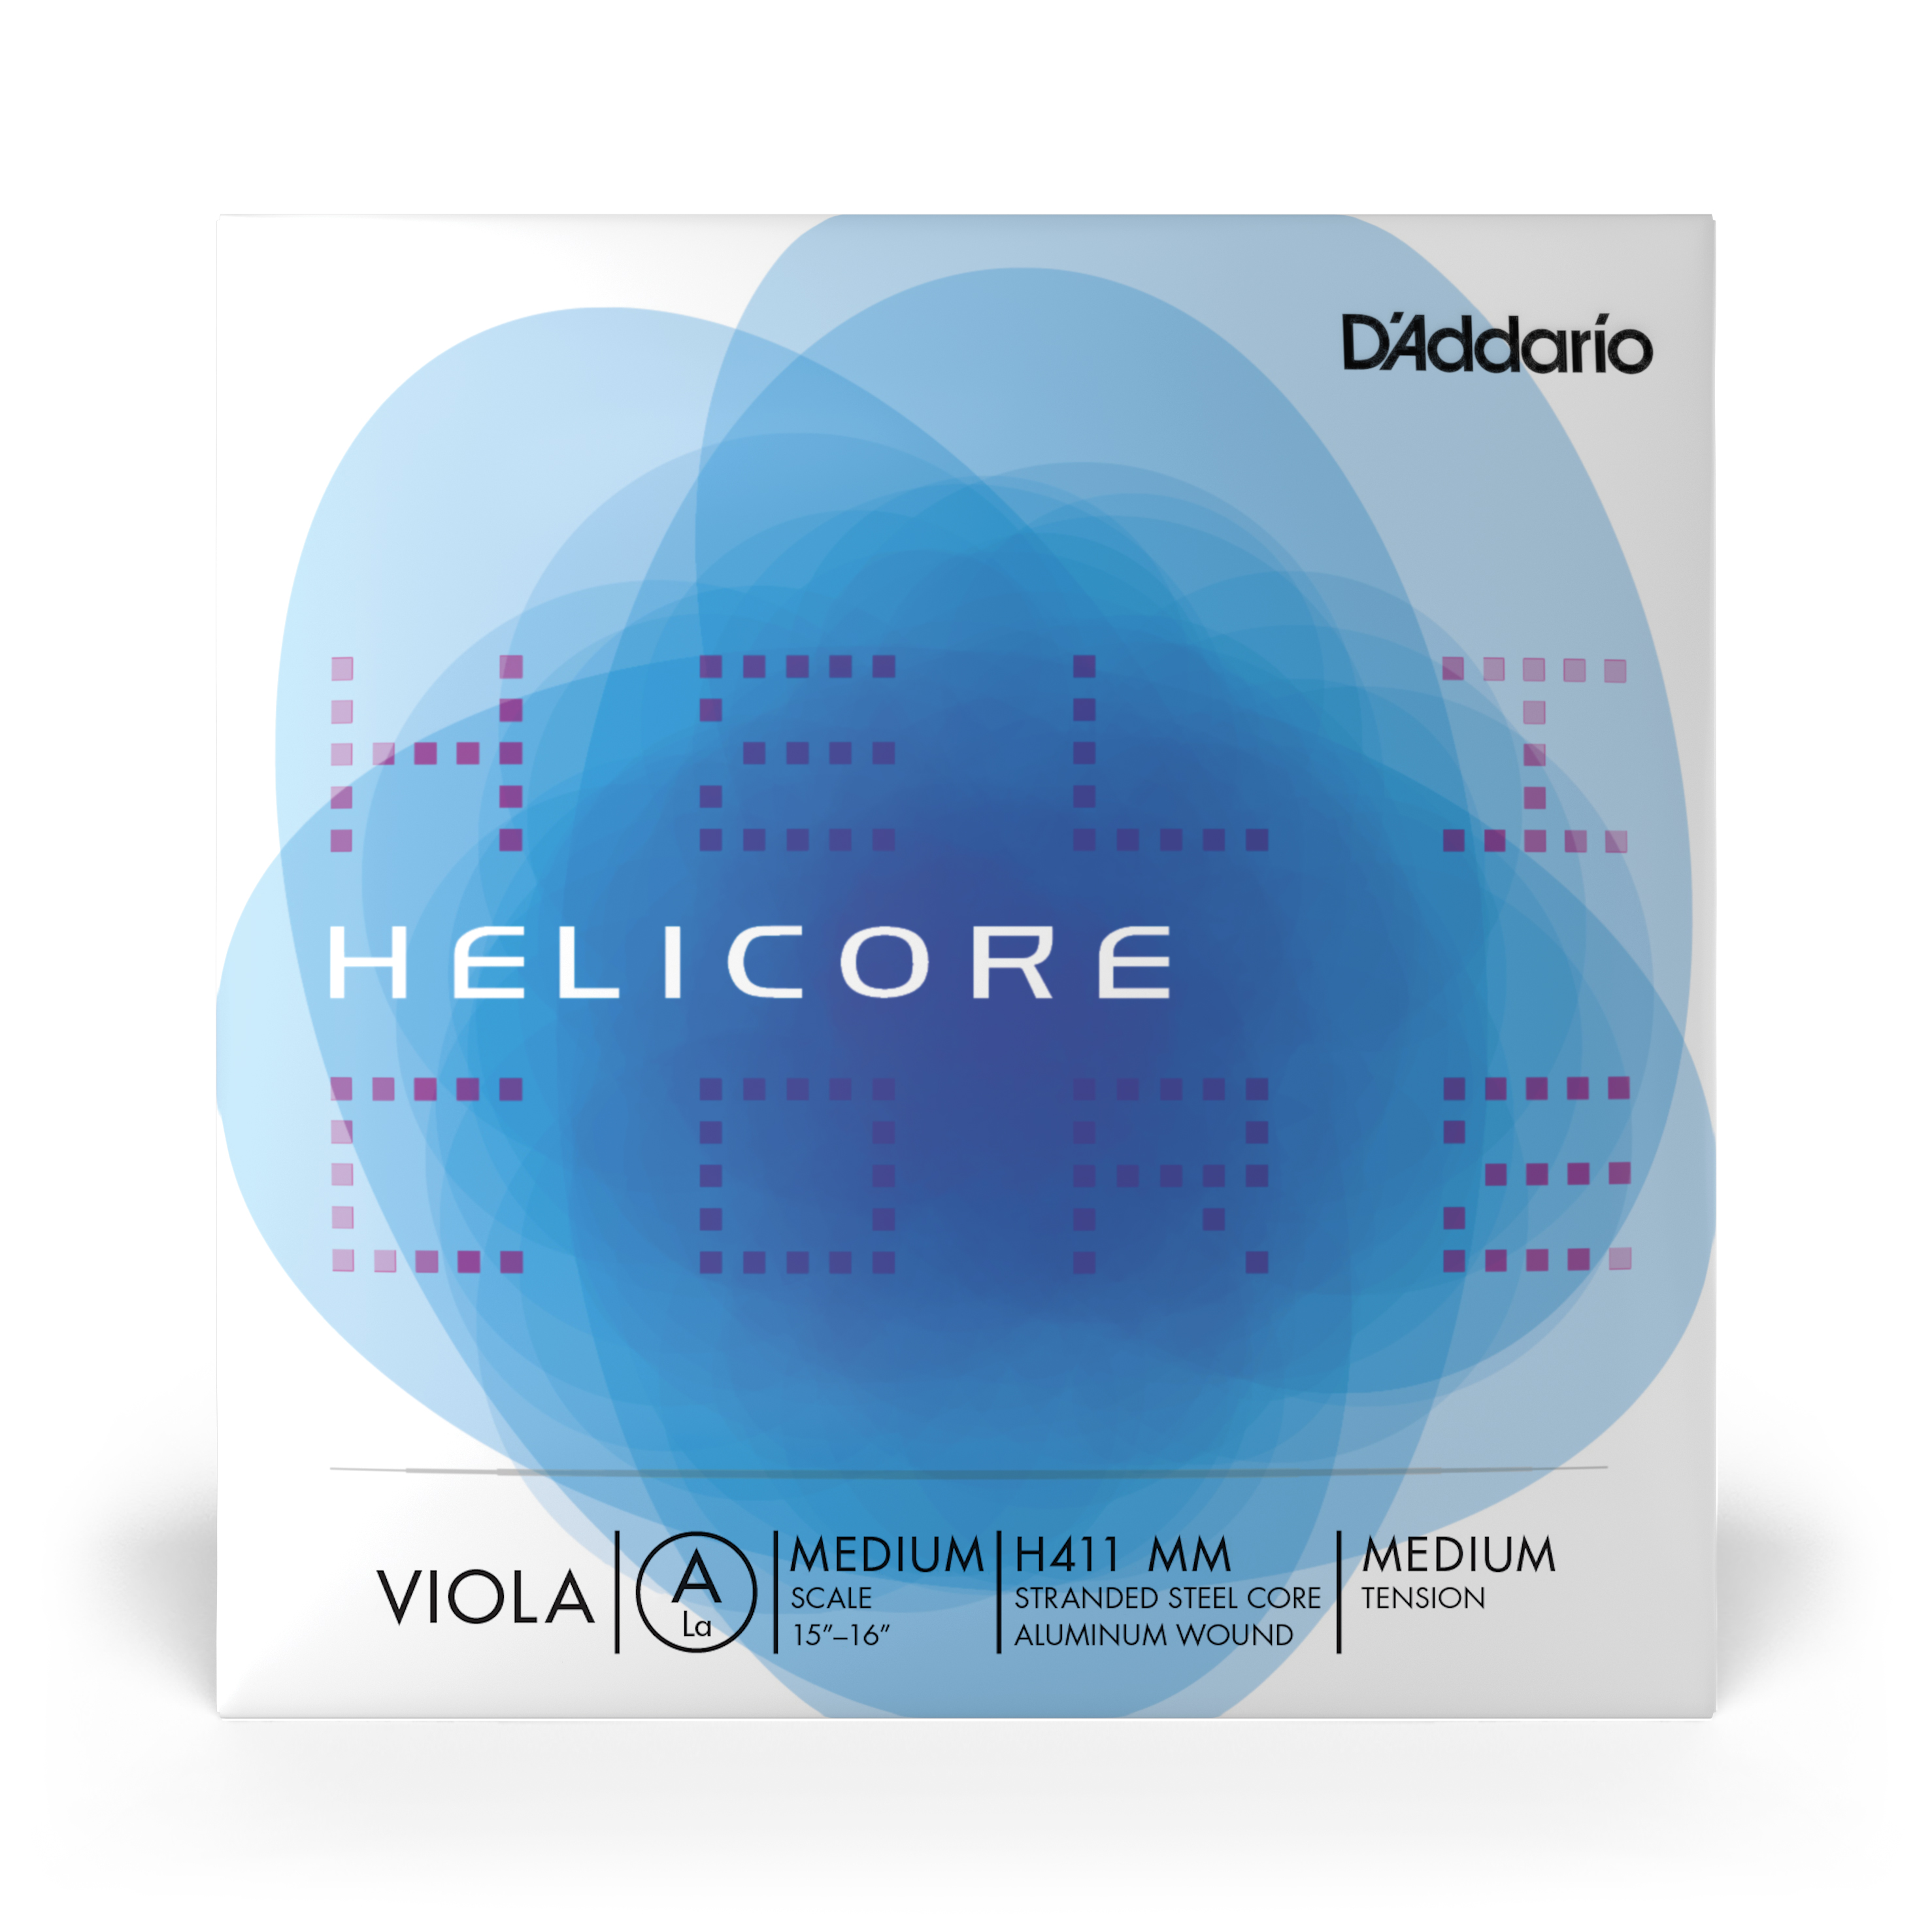 Daddario orchestral it H411 mm corda singola la d'addario helicore per viola, medium scale, tensione media